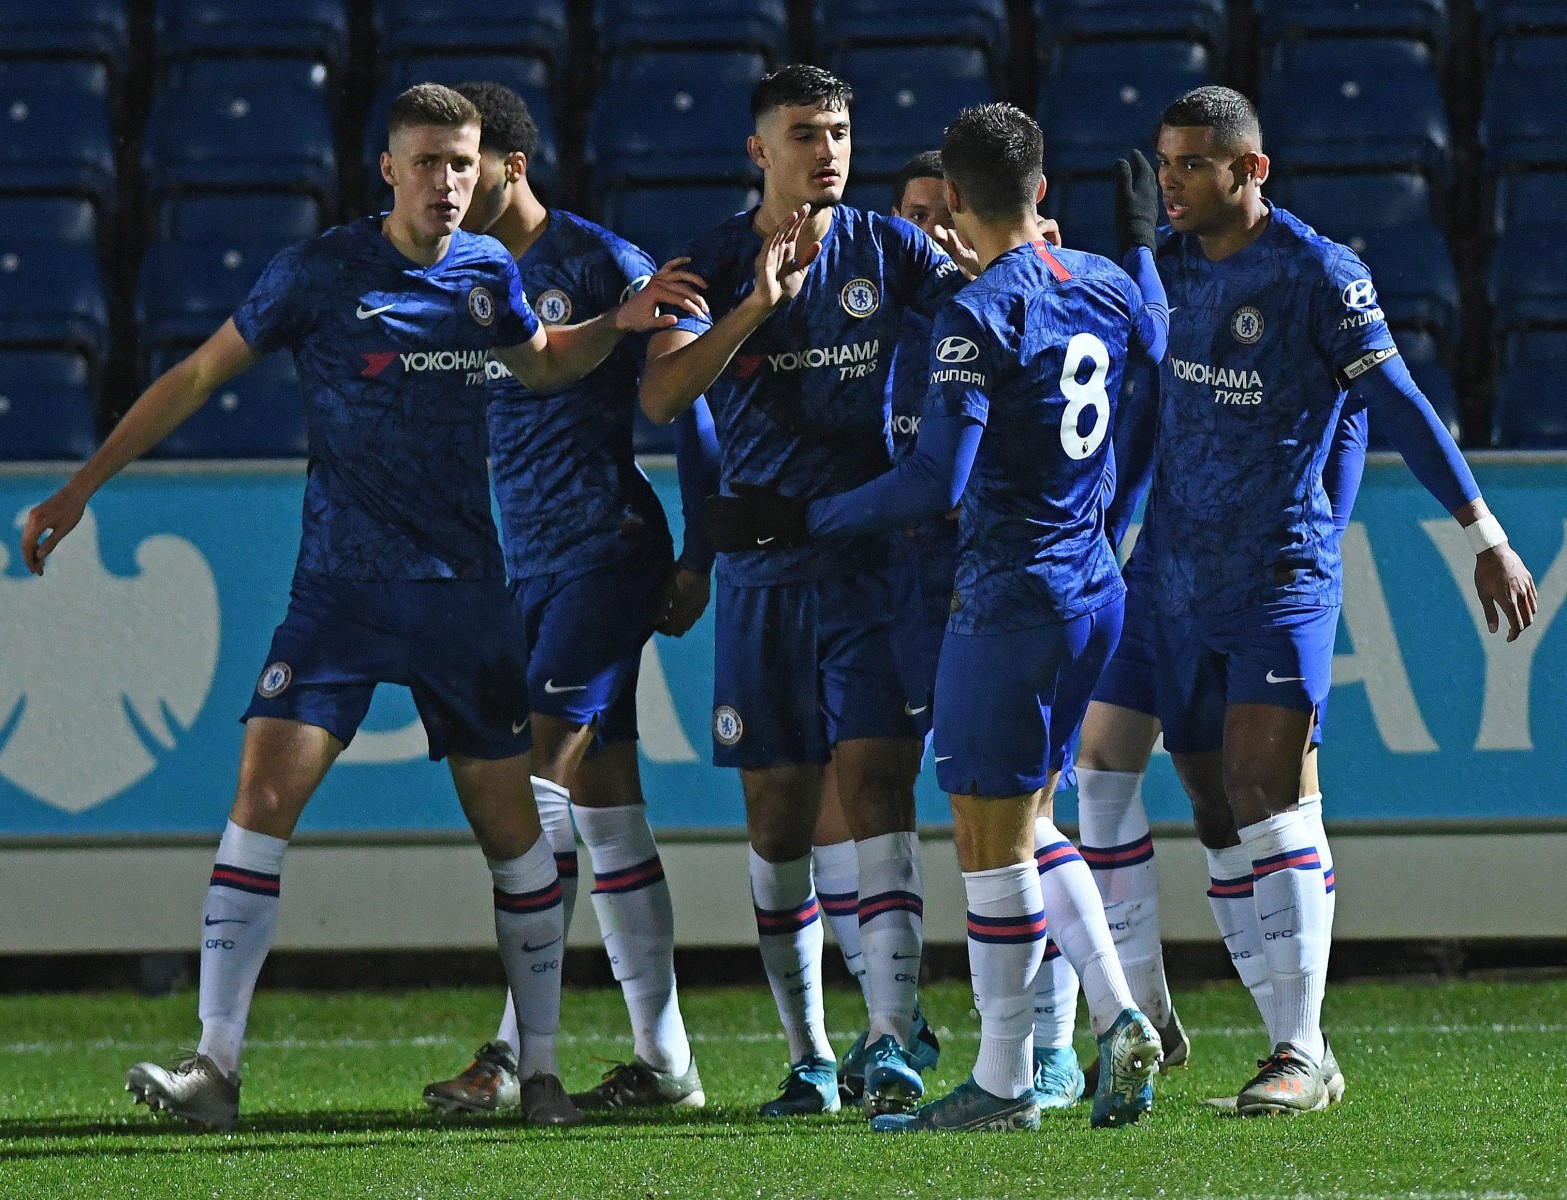 , Chelseas latest academy prodigy Armando Broja, 18, scores hat-trick for youth team vs Huddersfield